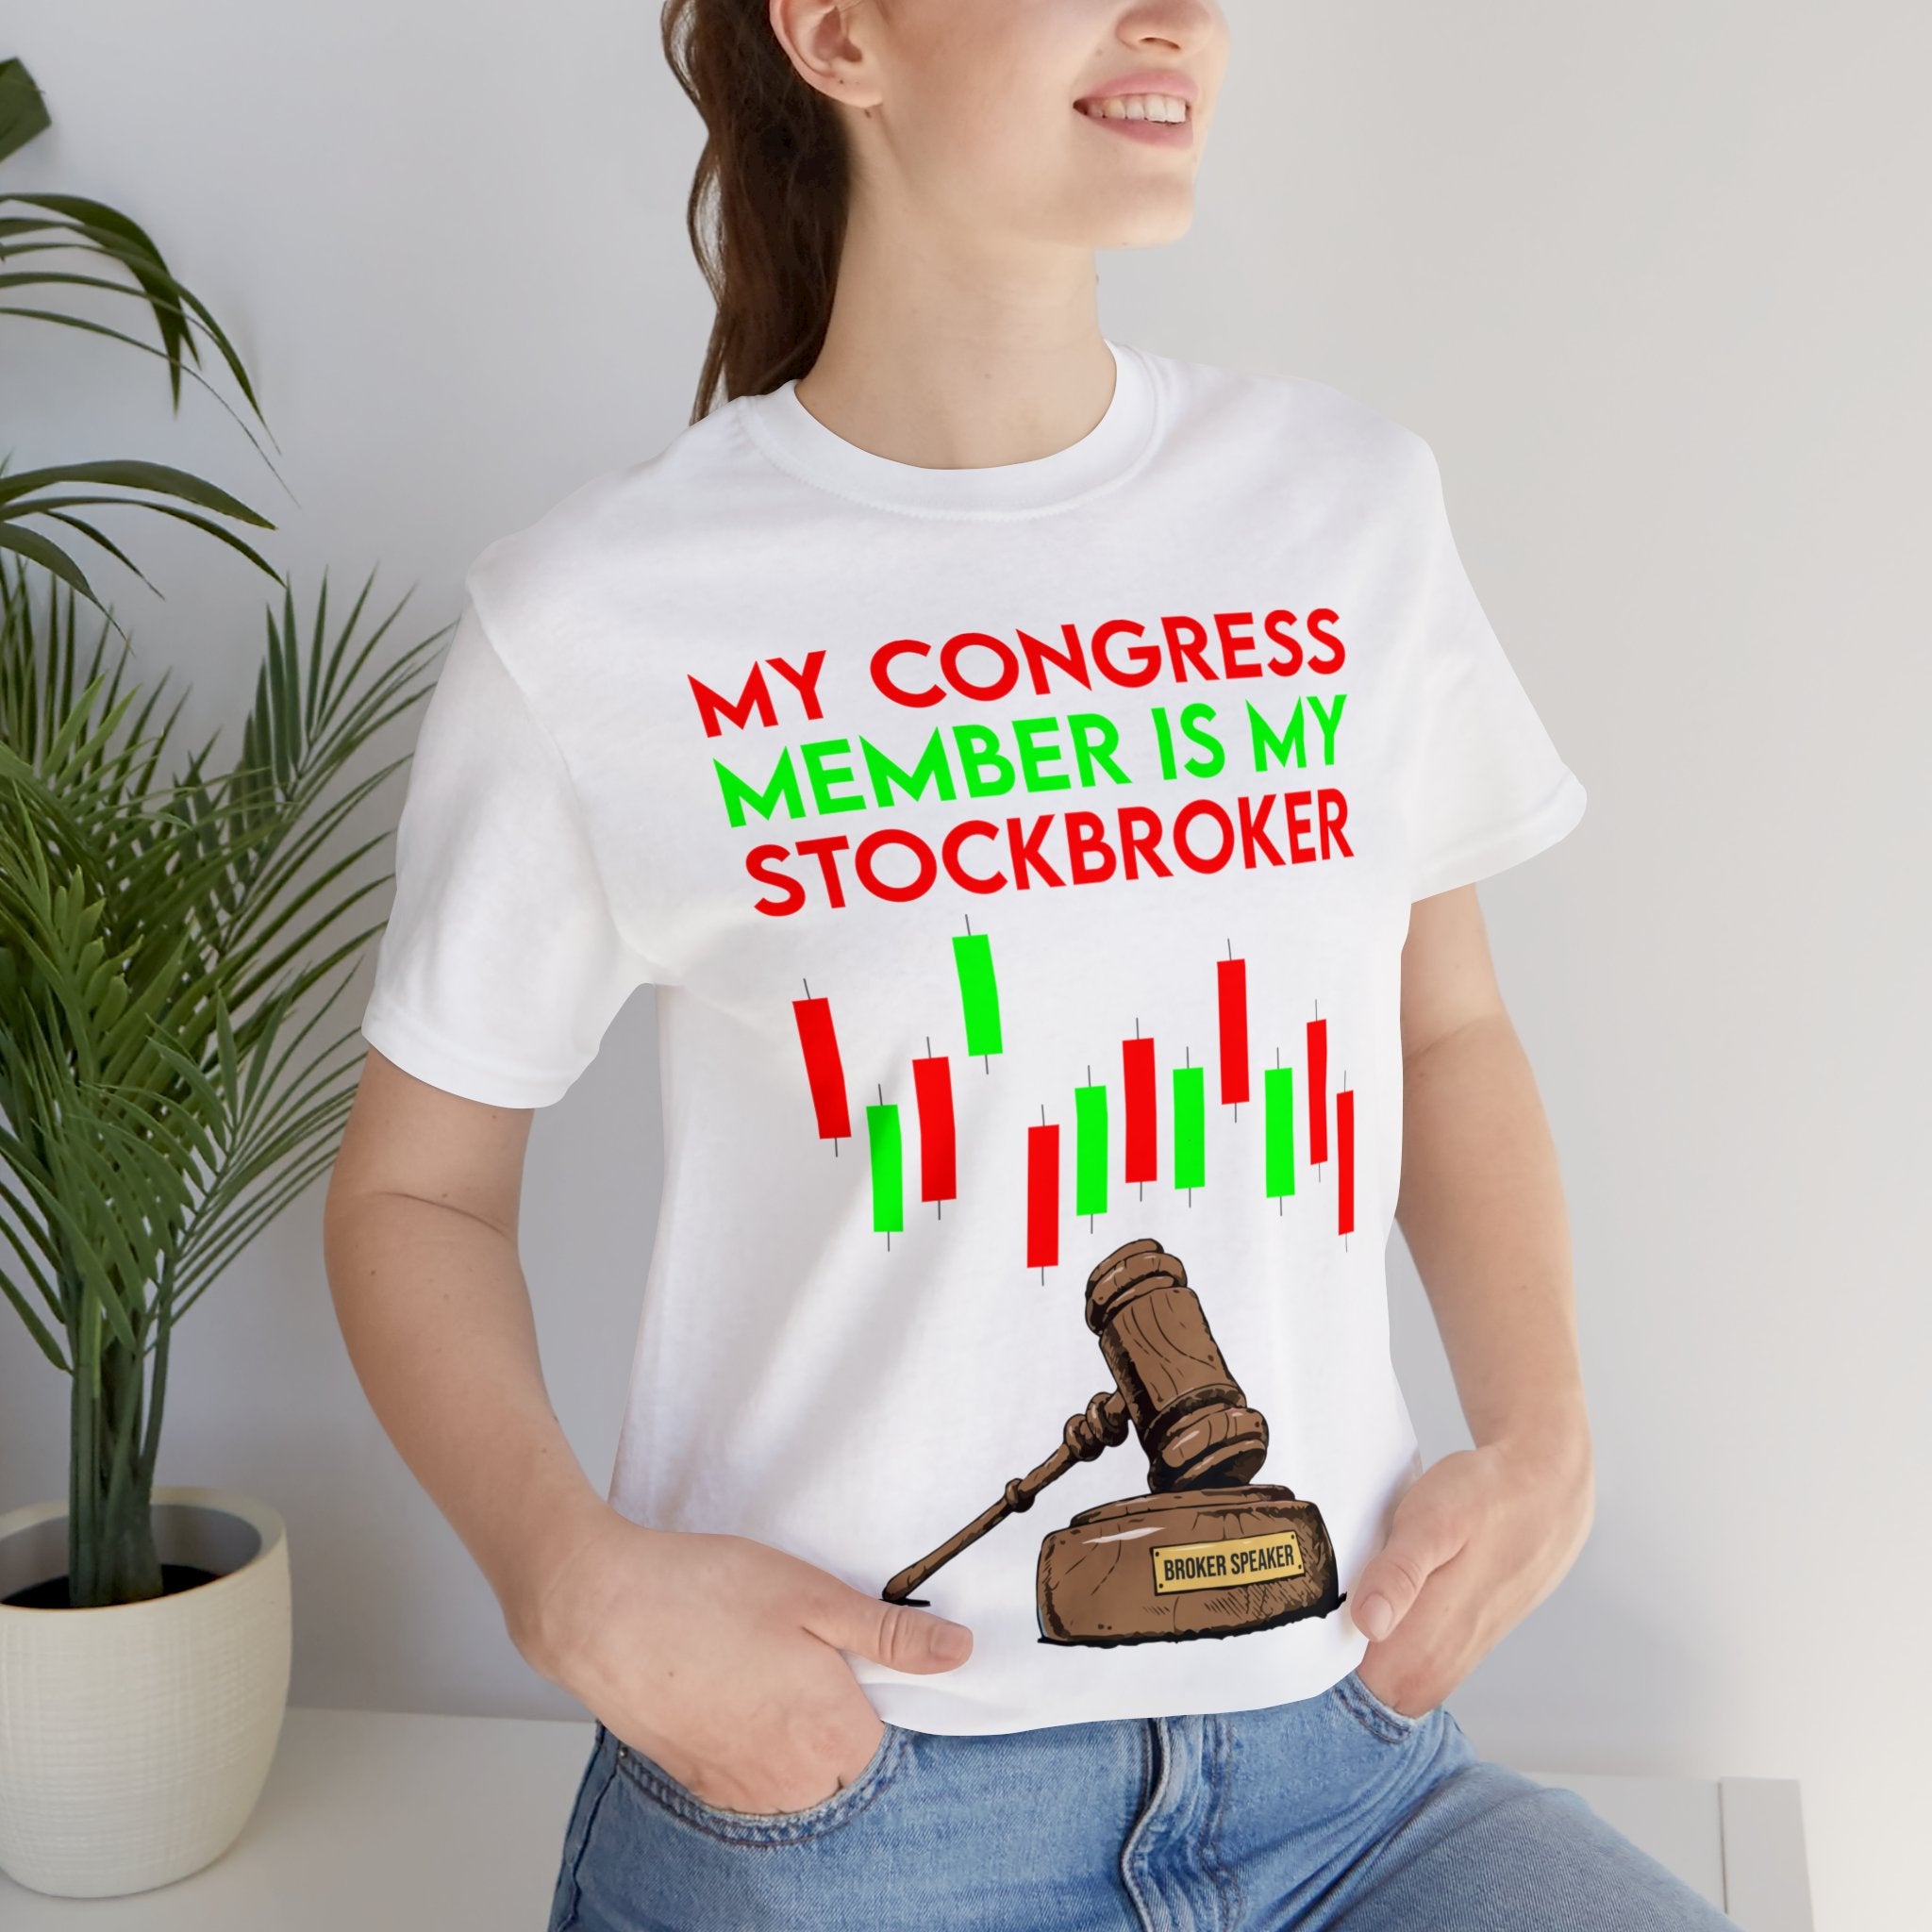 My Congress Member is My Stockbroker